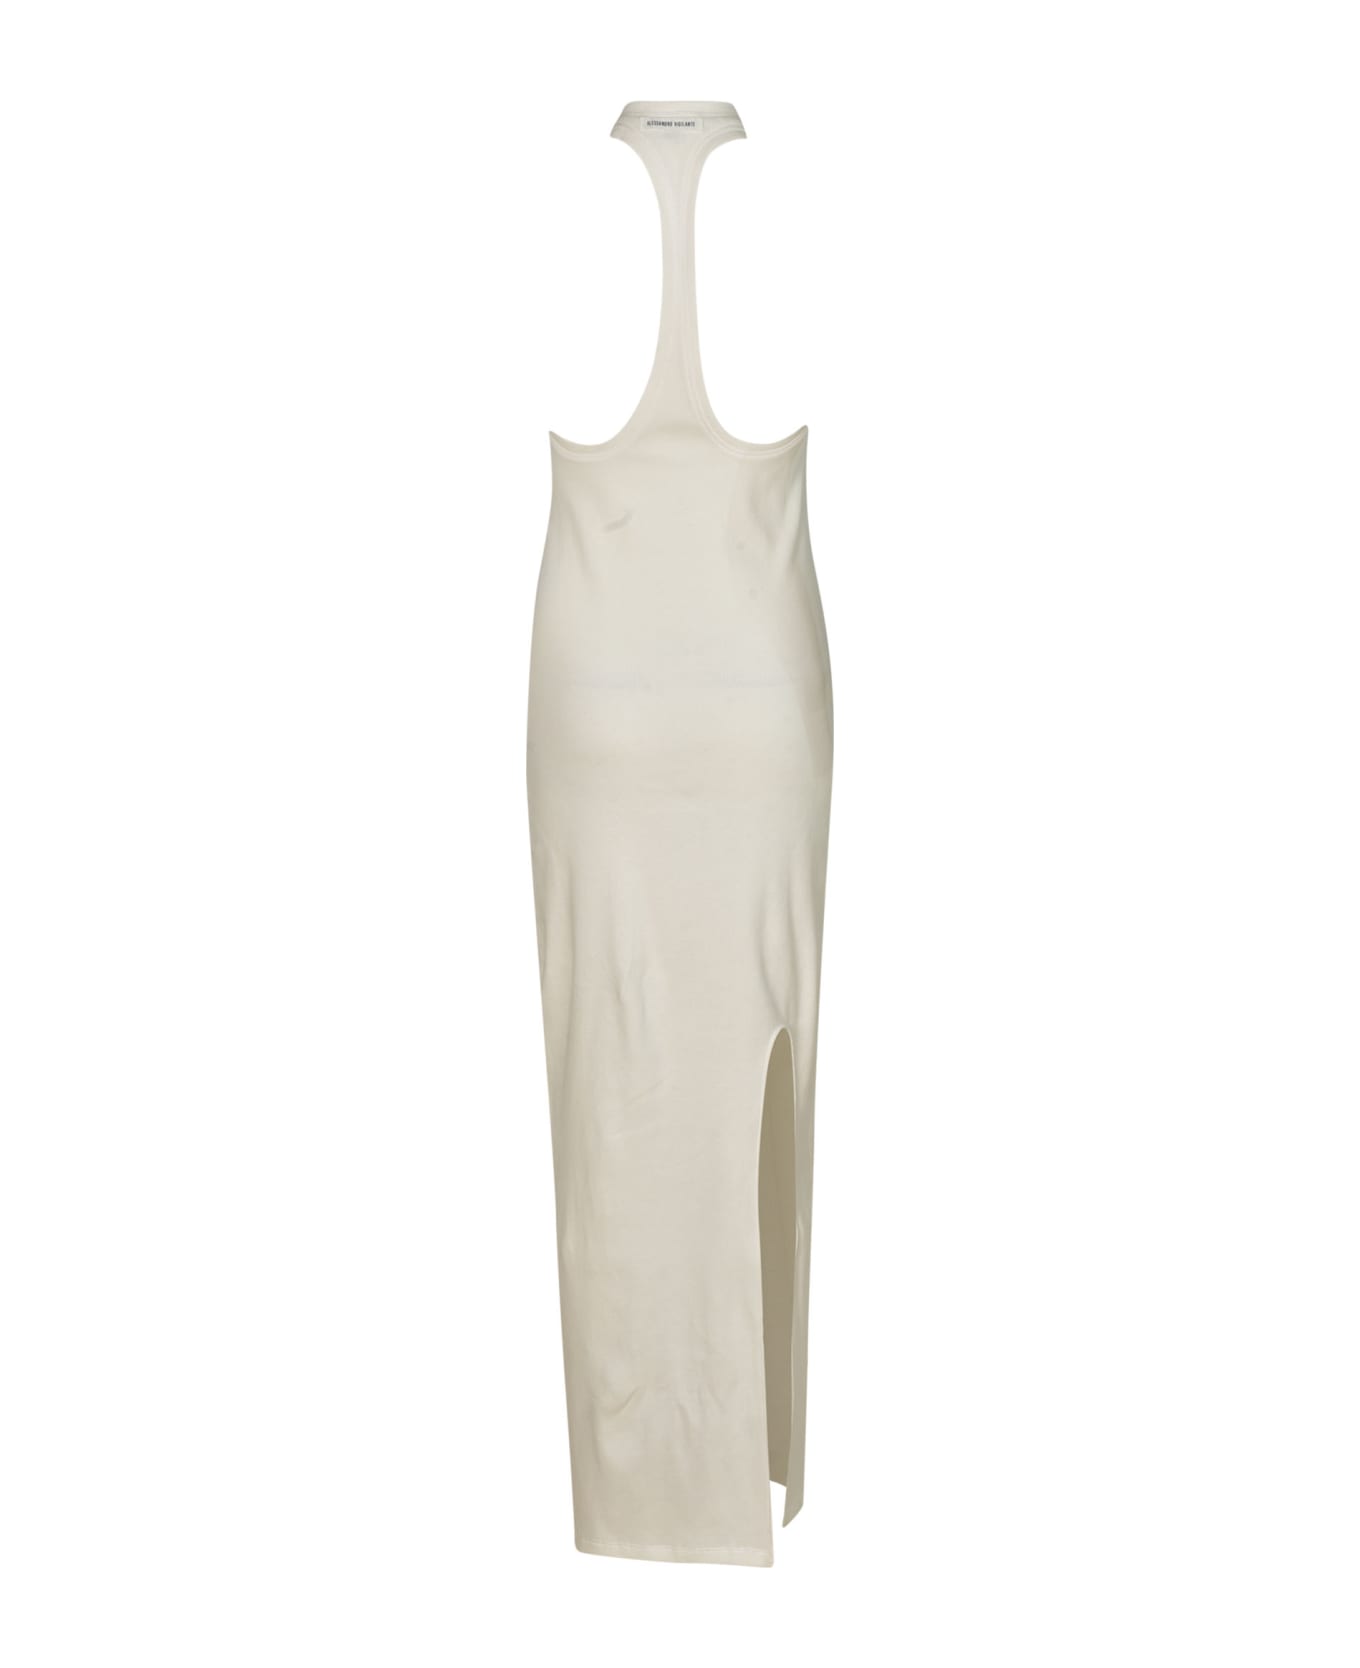 Alessandro Vigilante Knit Tank Dress - White